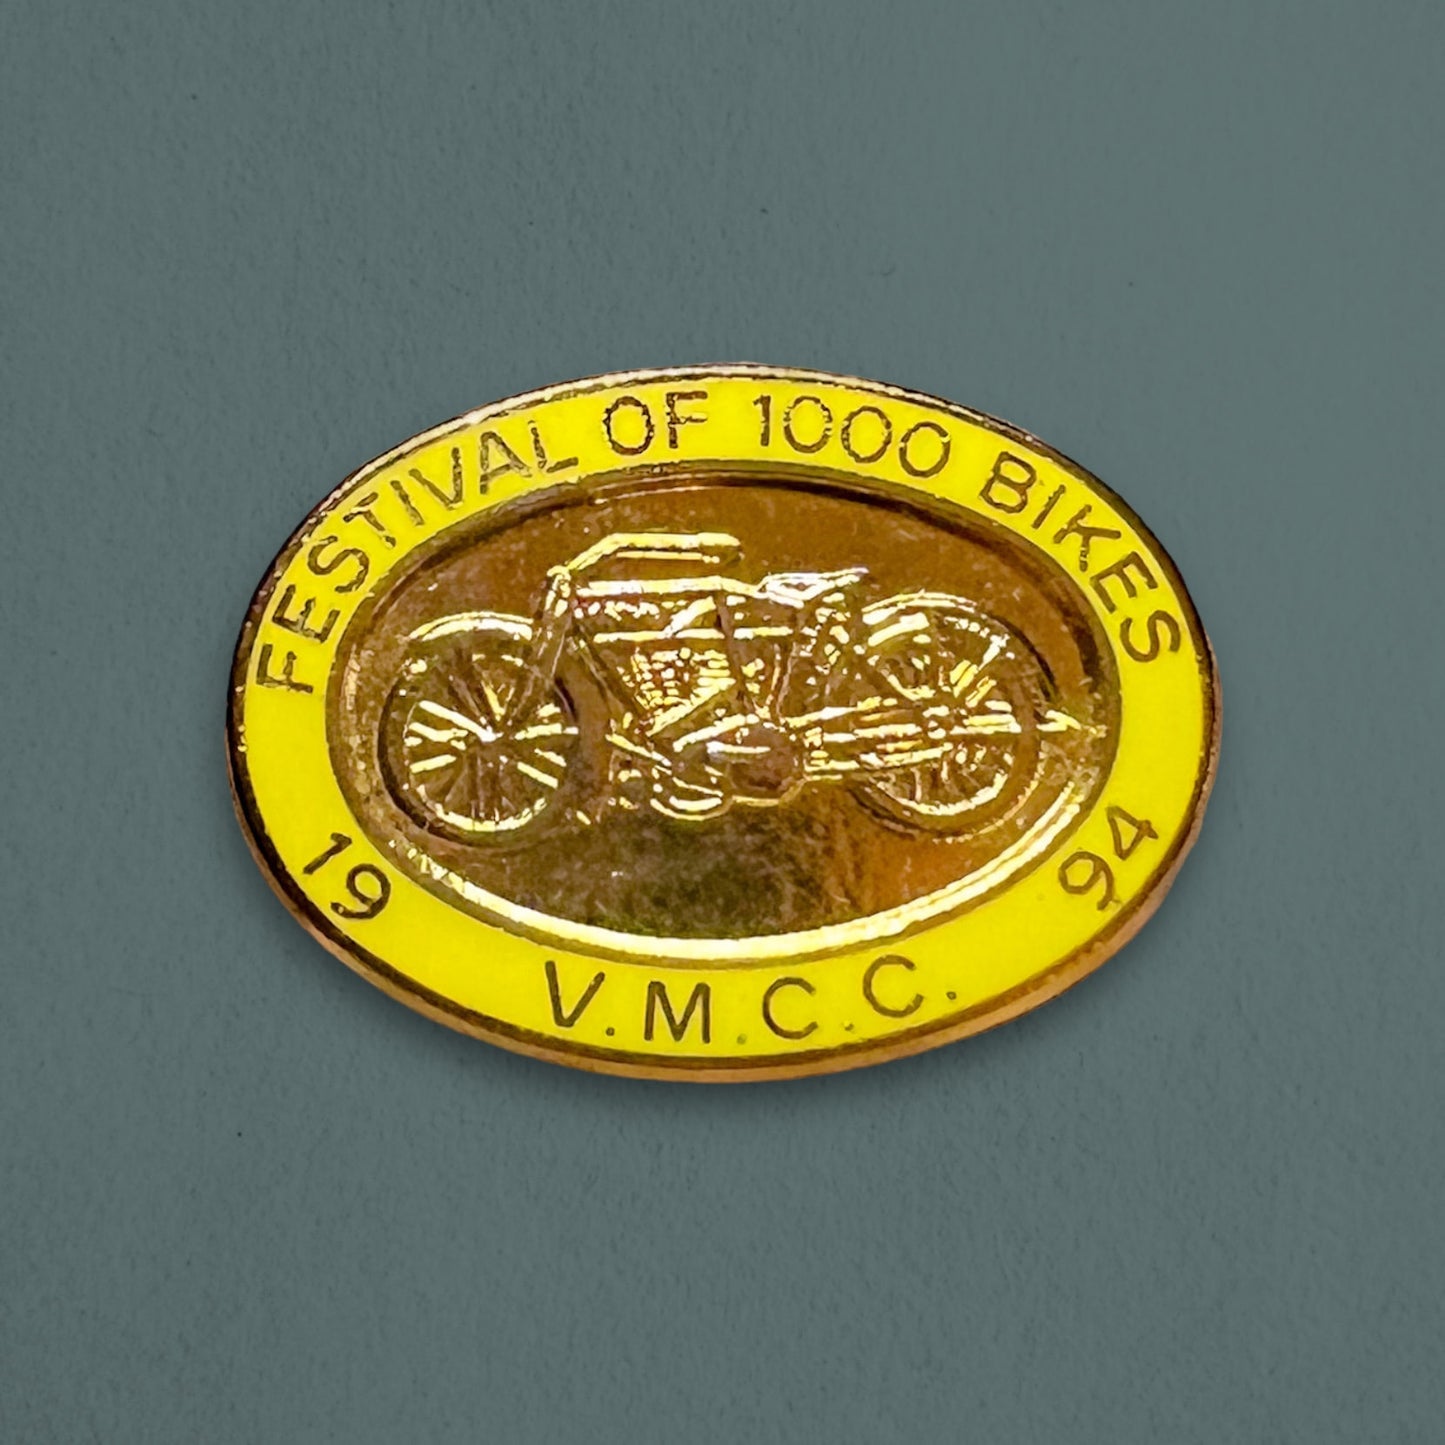 Vintage 1994 Festival of 1000 Bikes Enamel Pin